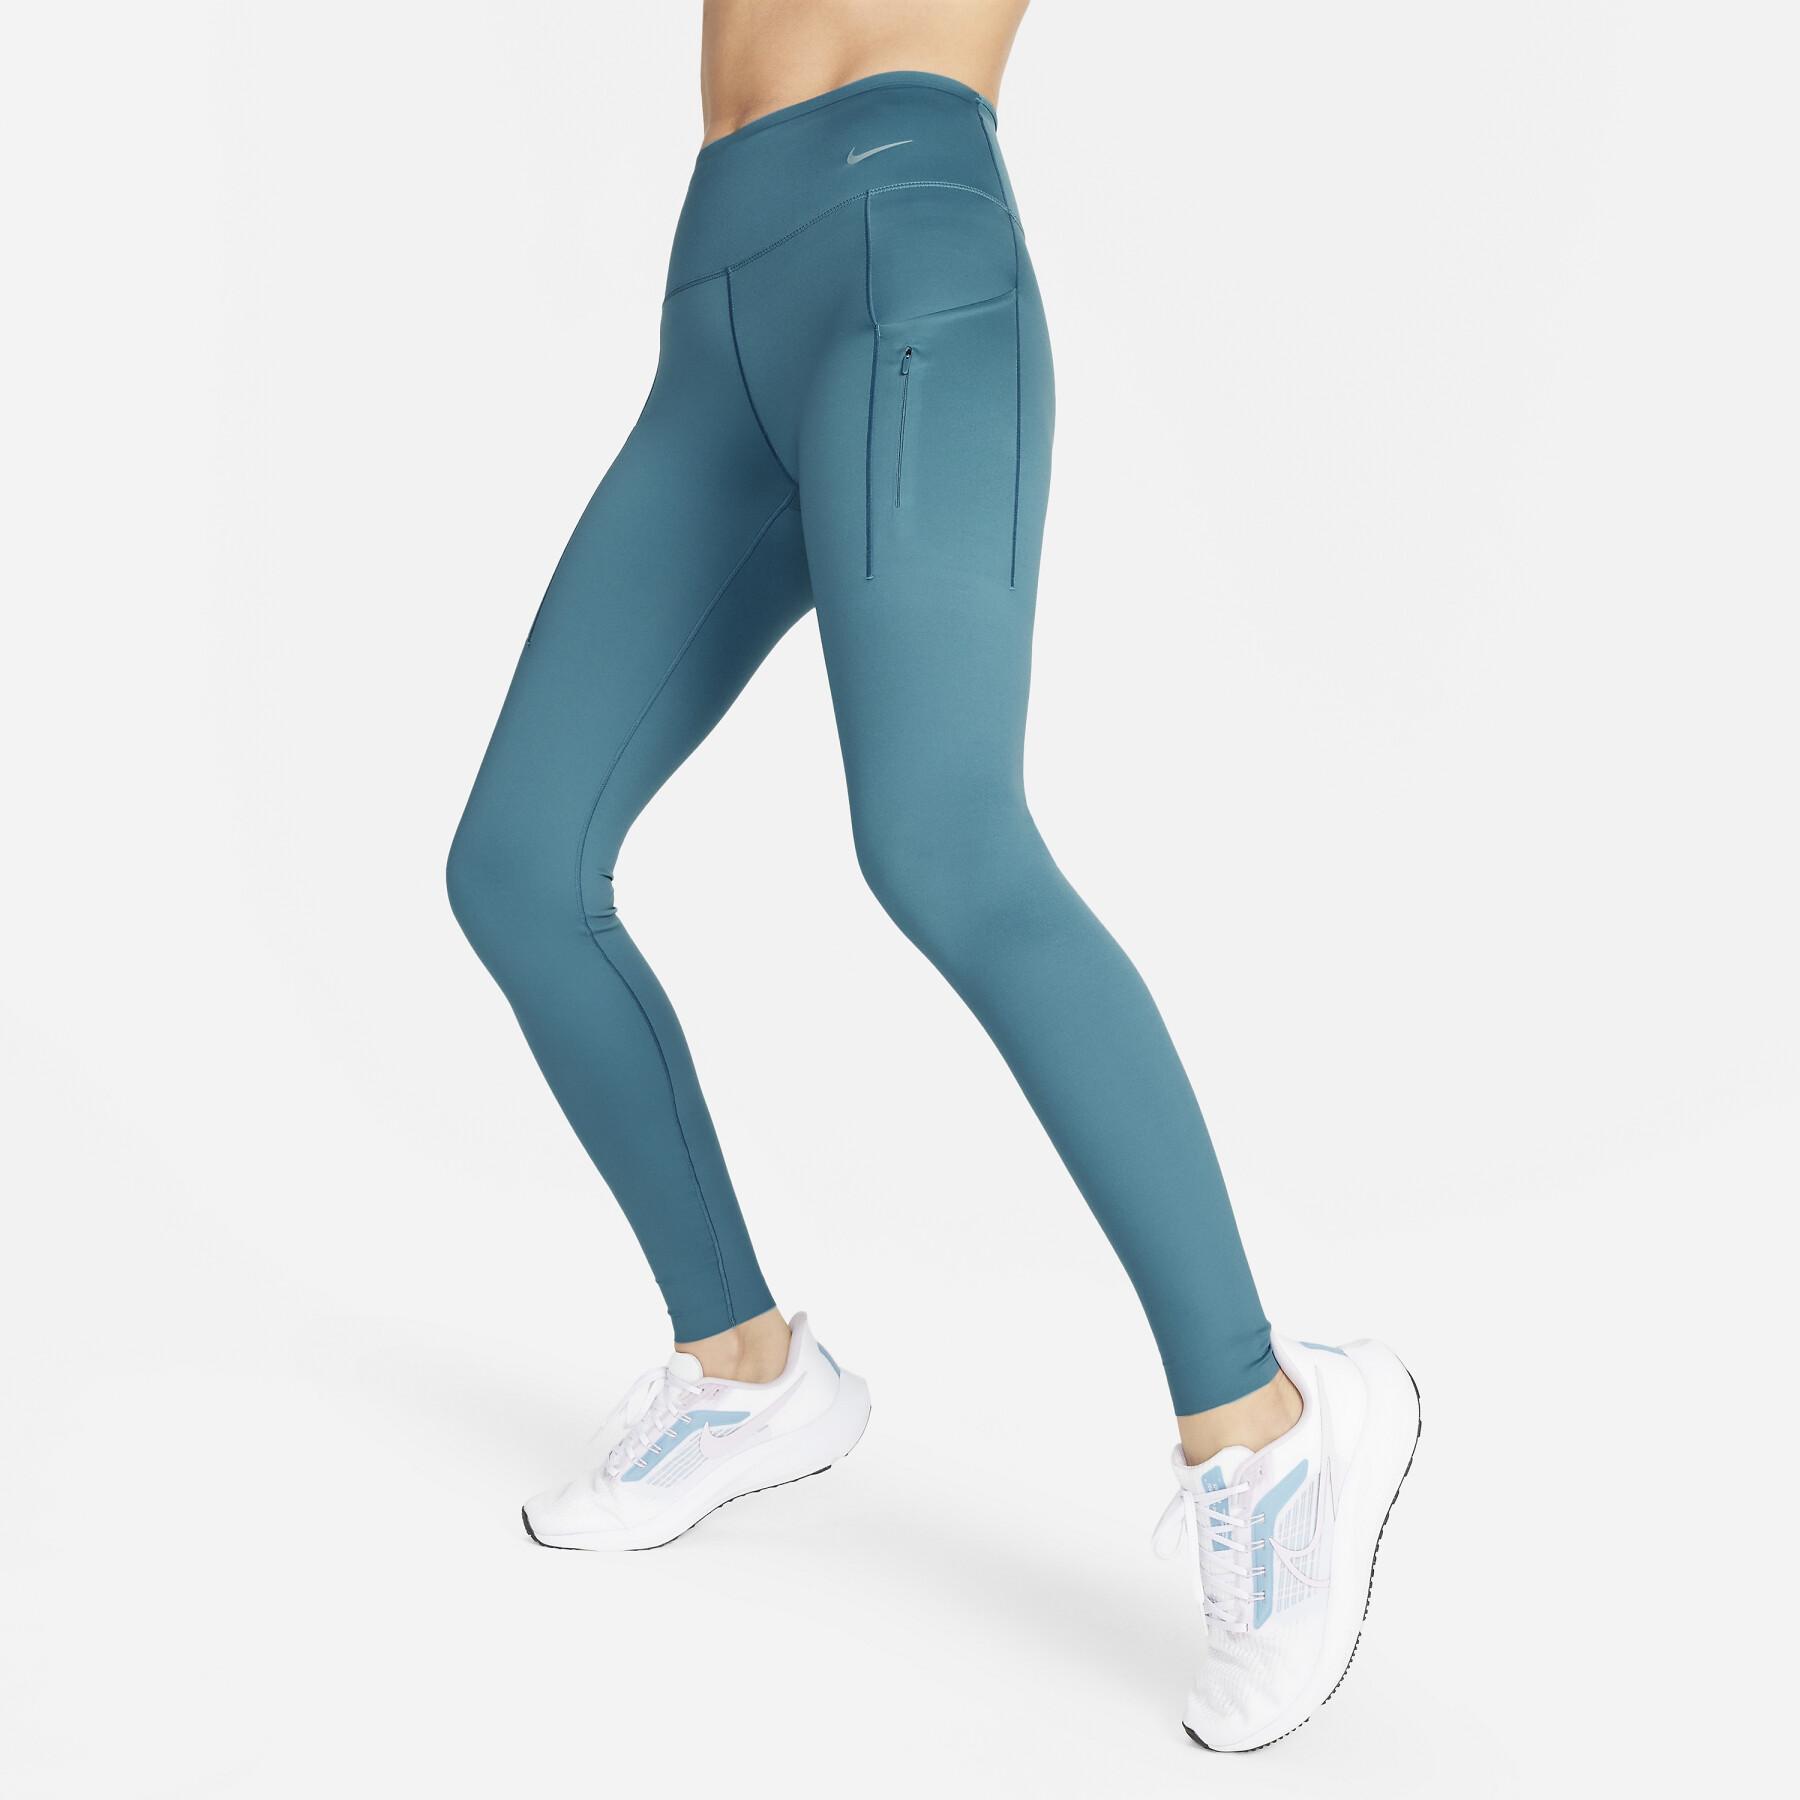 Legging woman Nike Dri-Fit Go MR